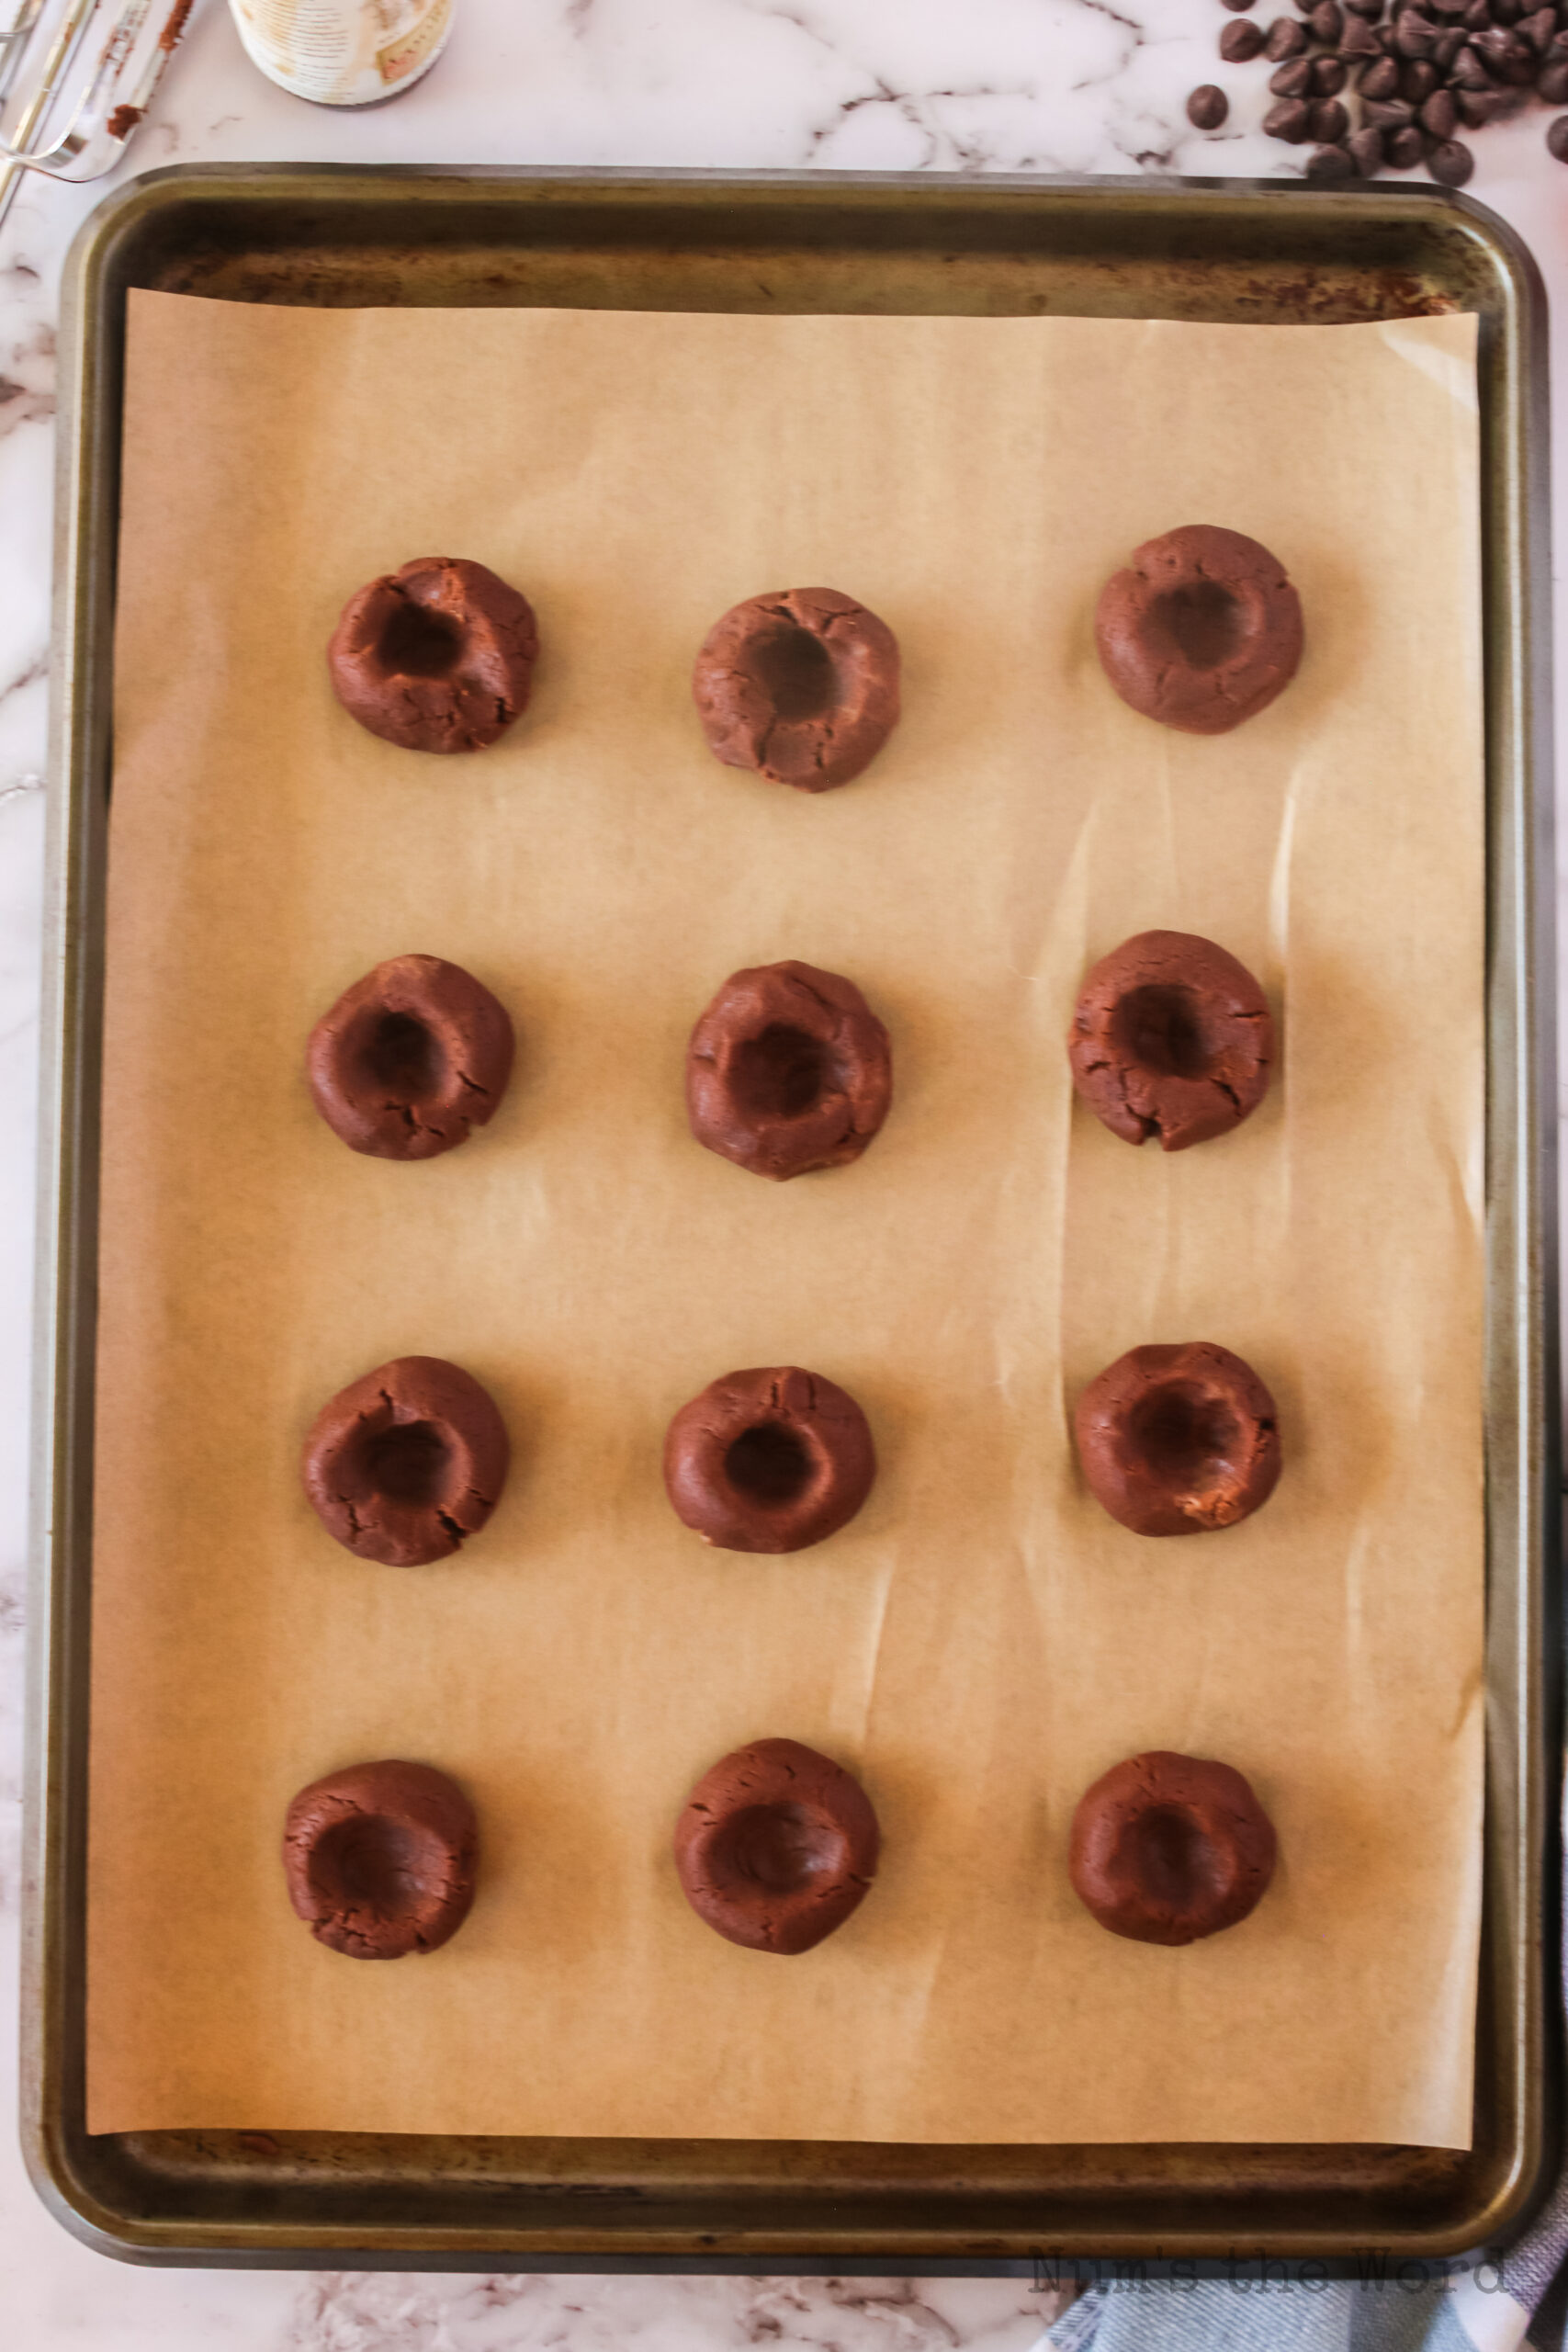 a thumbprint placed into each dough ball